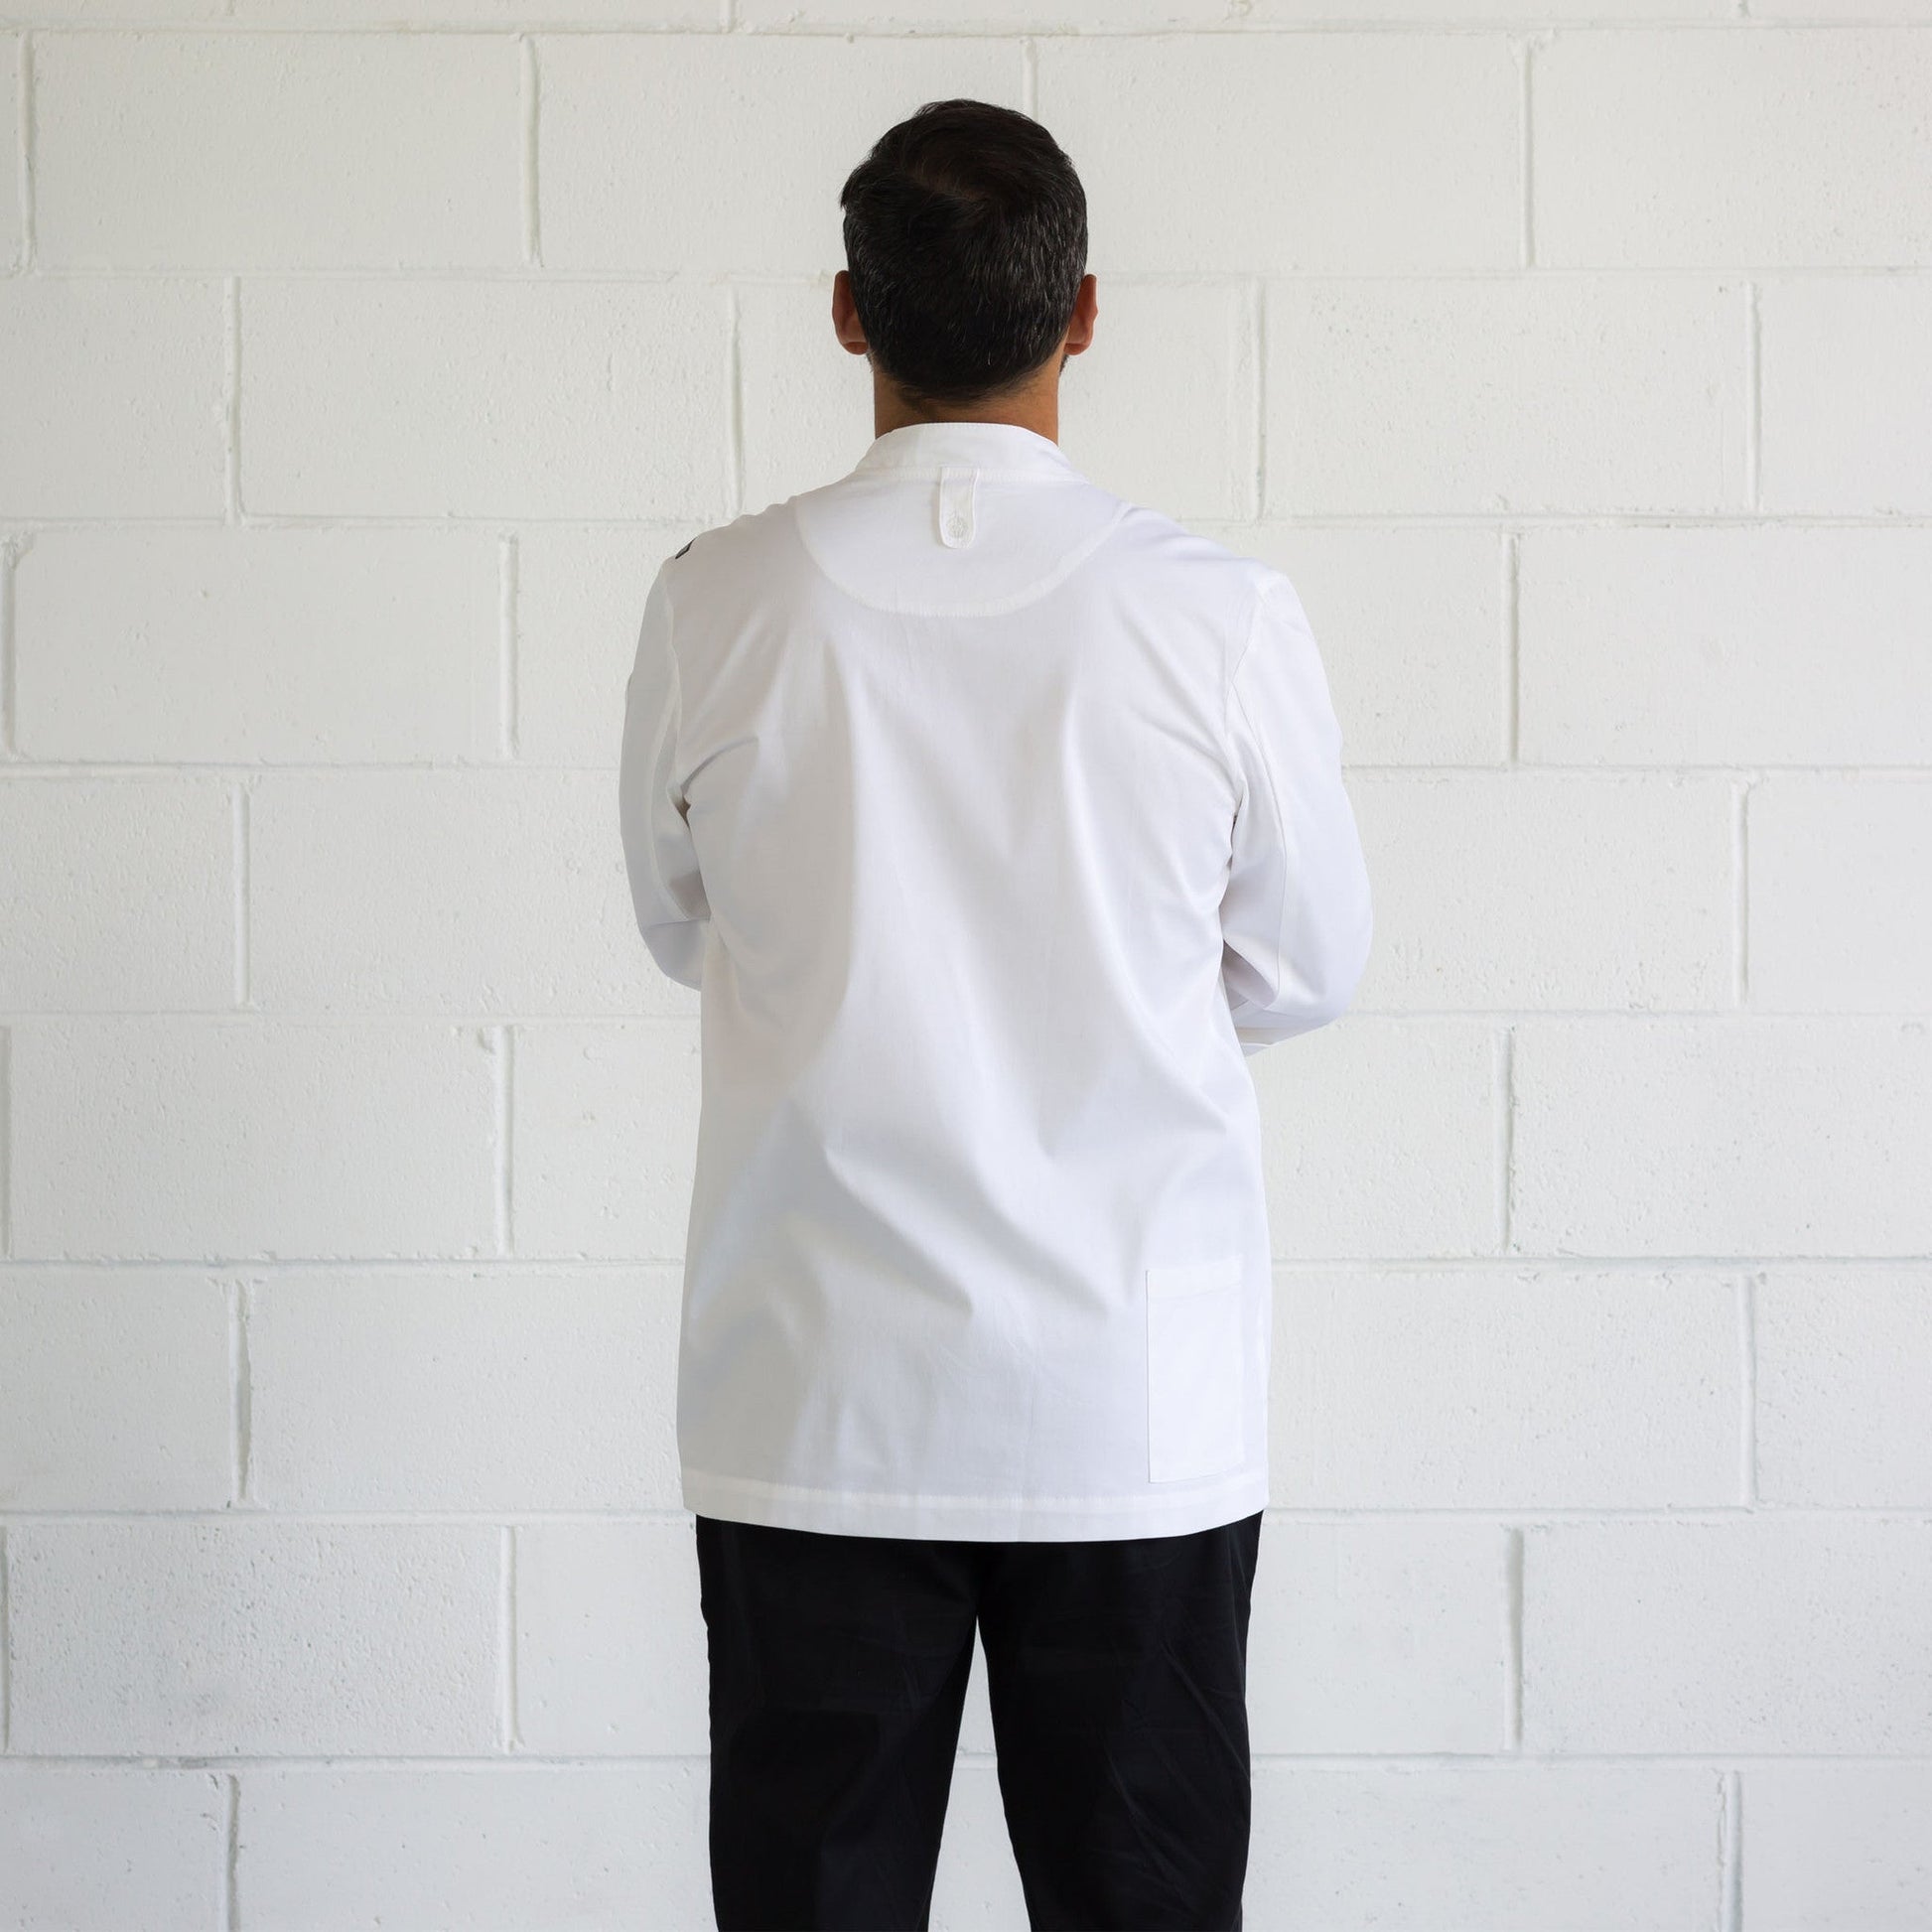 Men's-Chef-Jacket-Classic-Long-Sleeve-White-Back